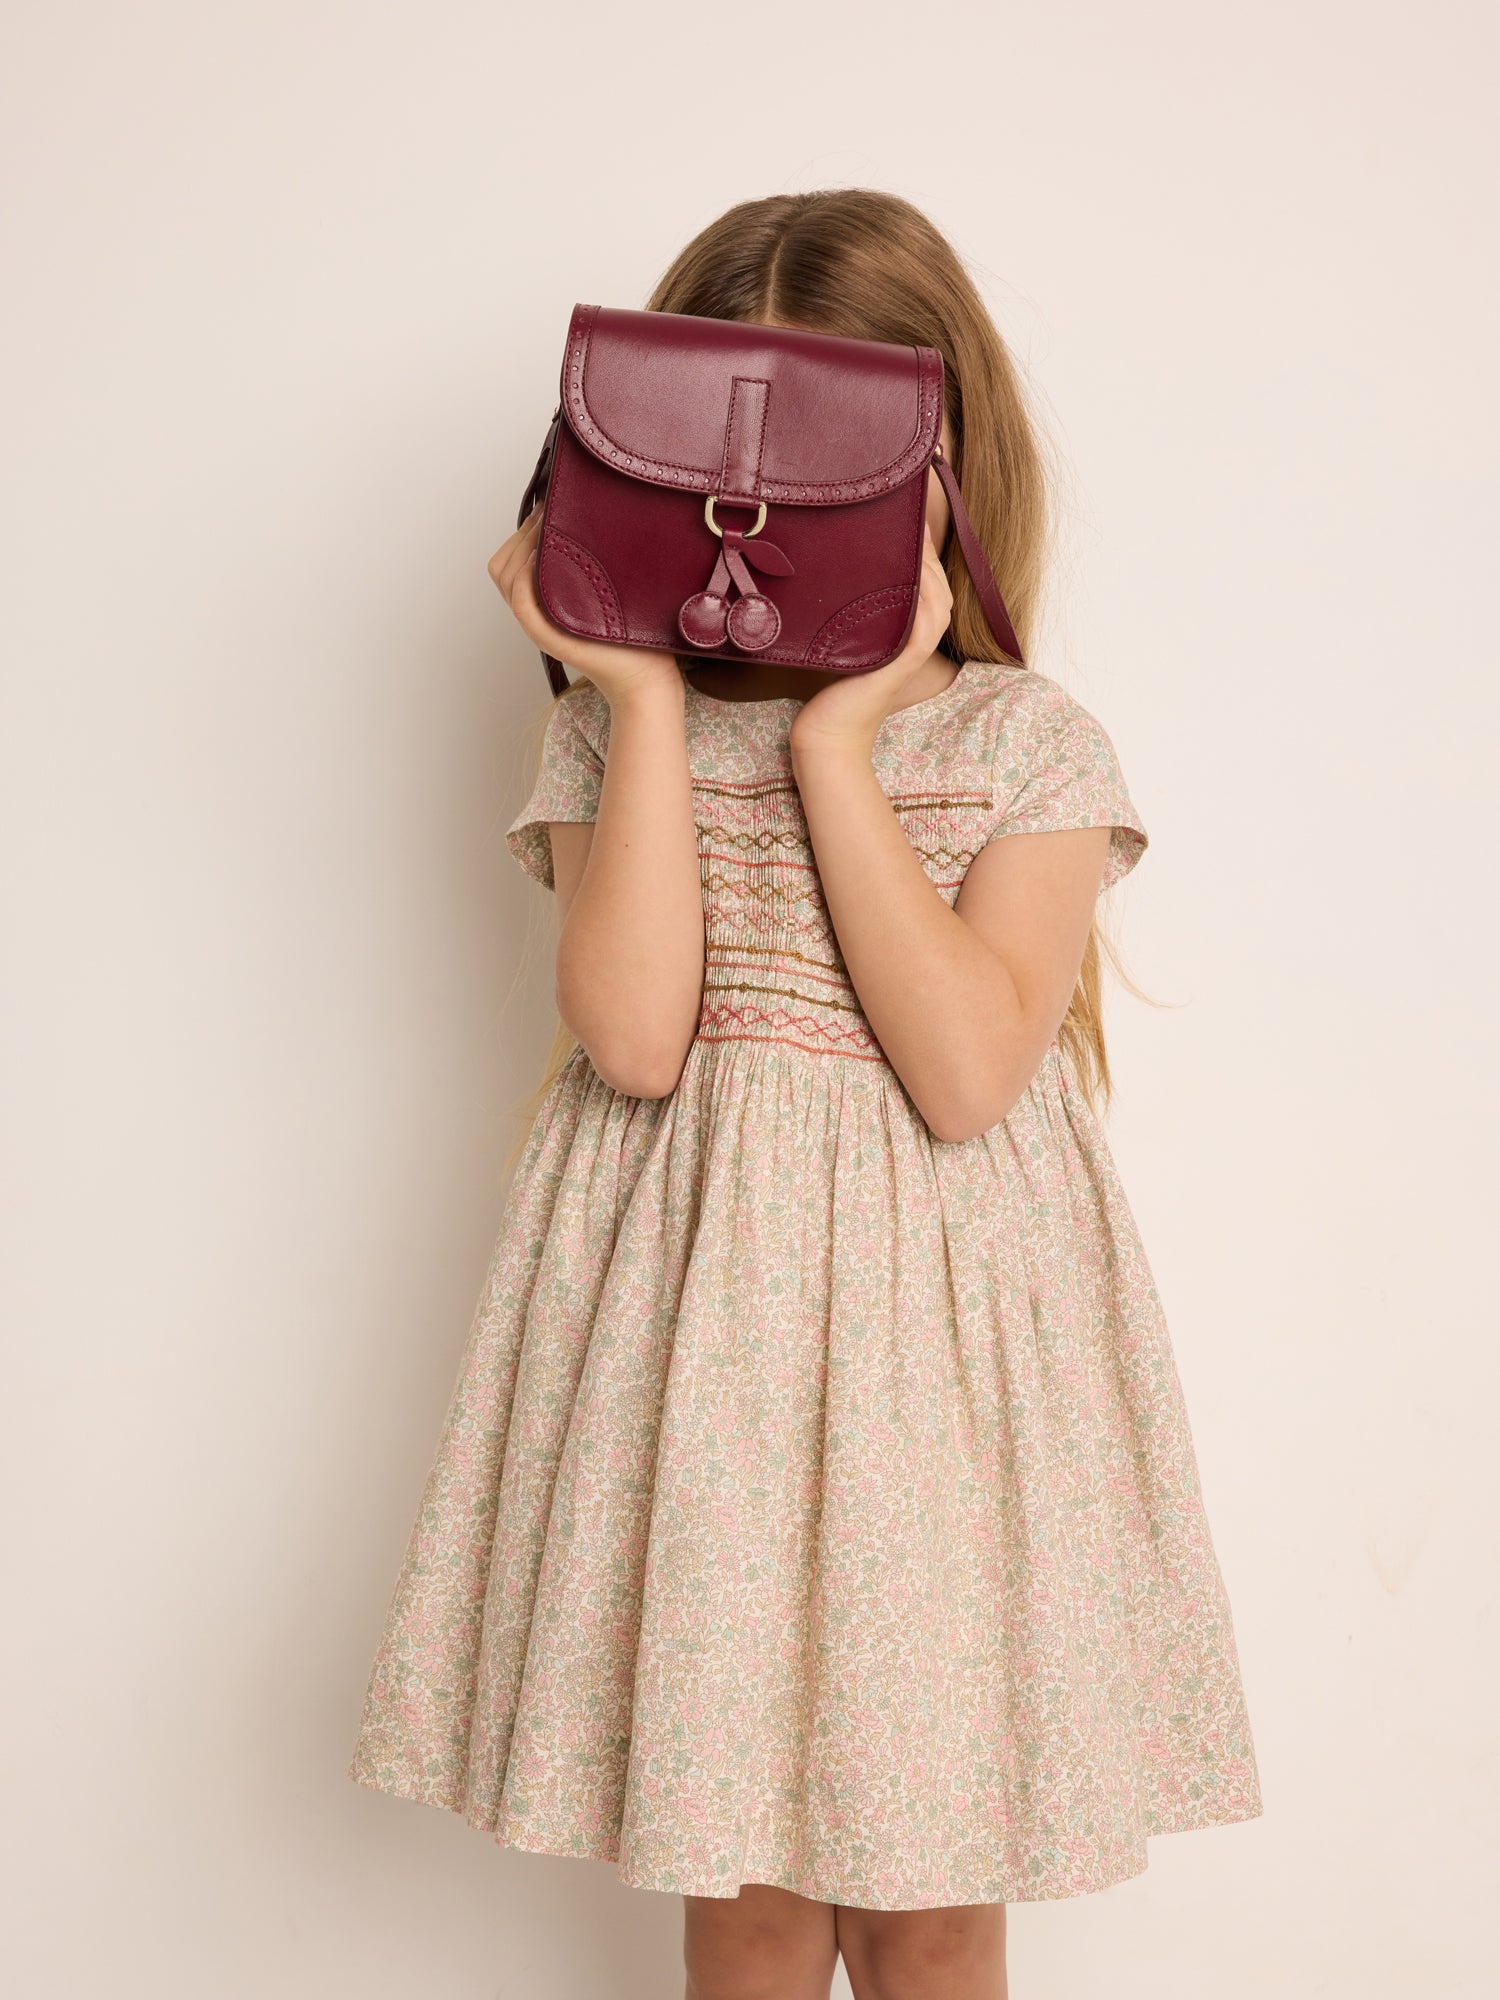 Kids Kitty Cat Mini Purse Bag Crossbody Girls Fashion 5 Colors Birthday Bag  | eBay